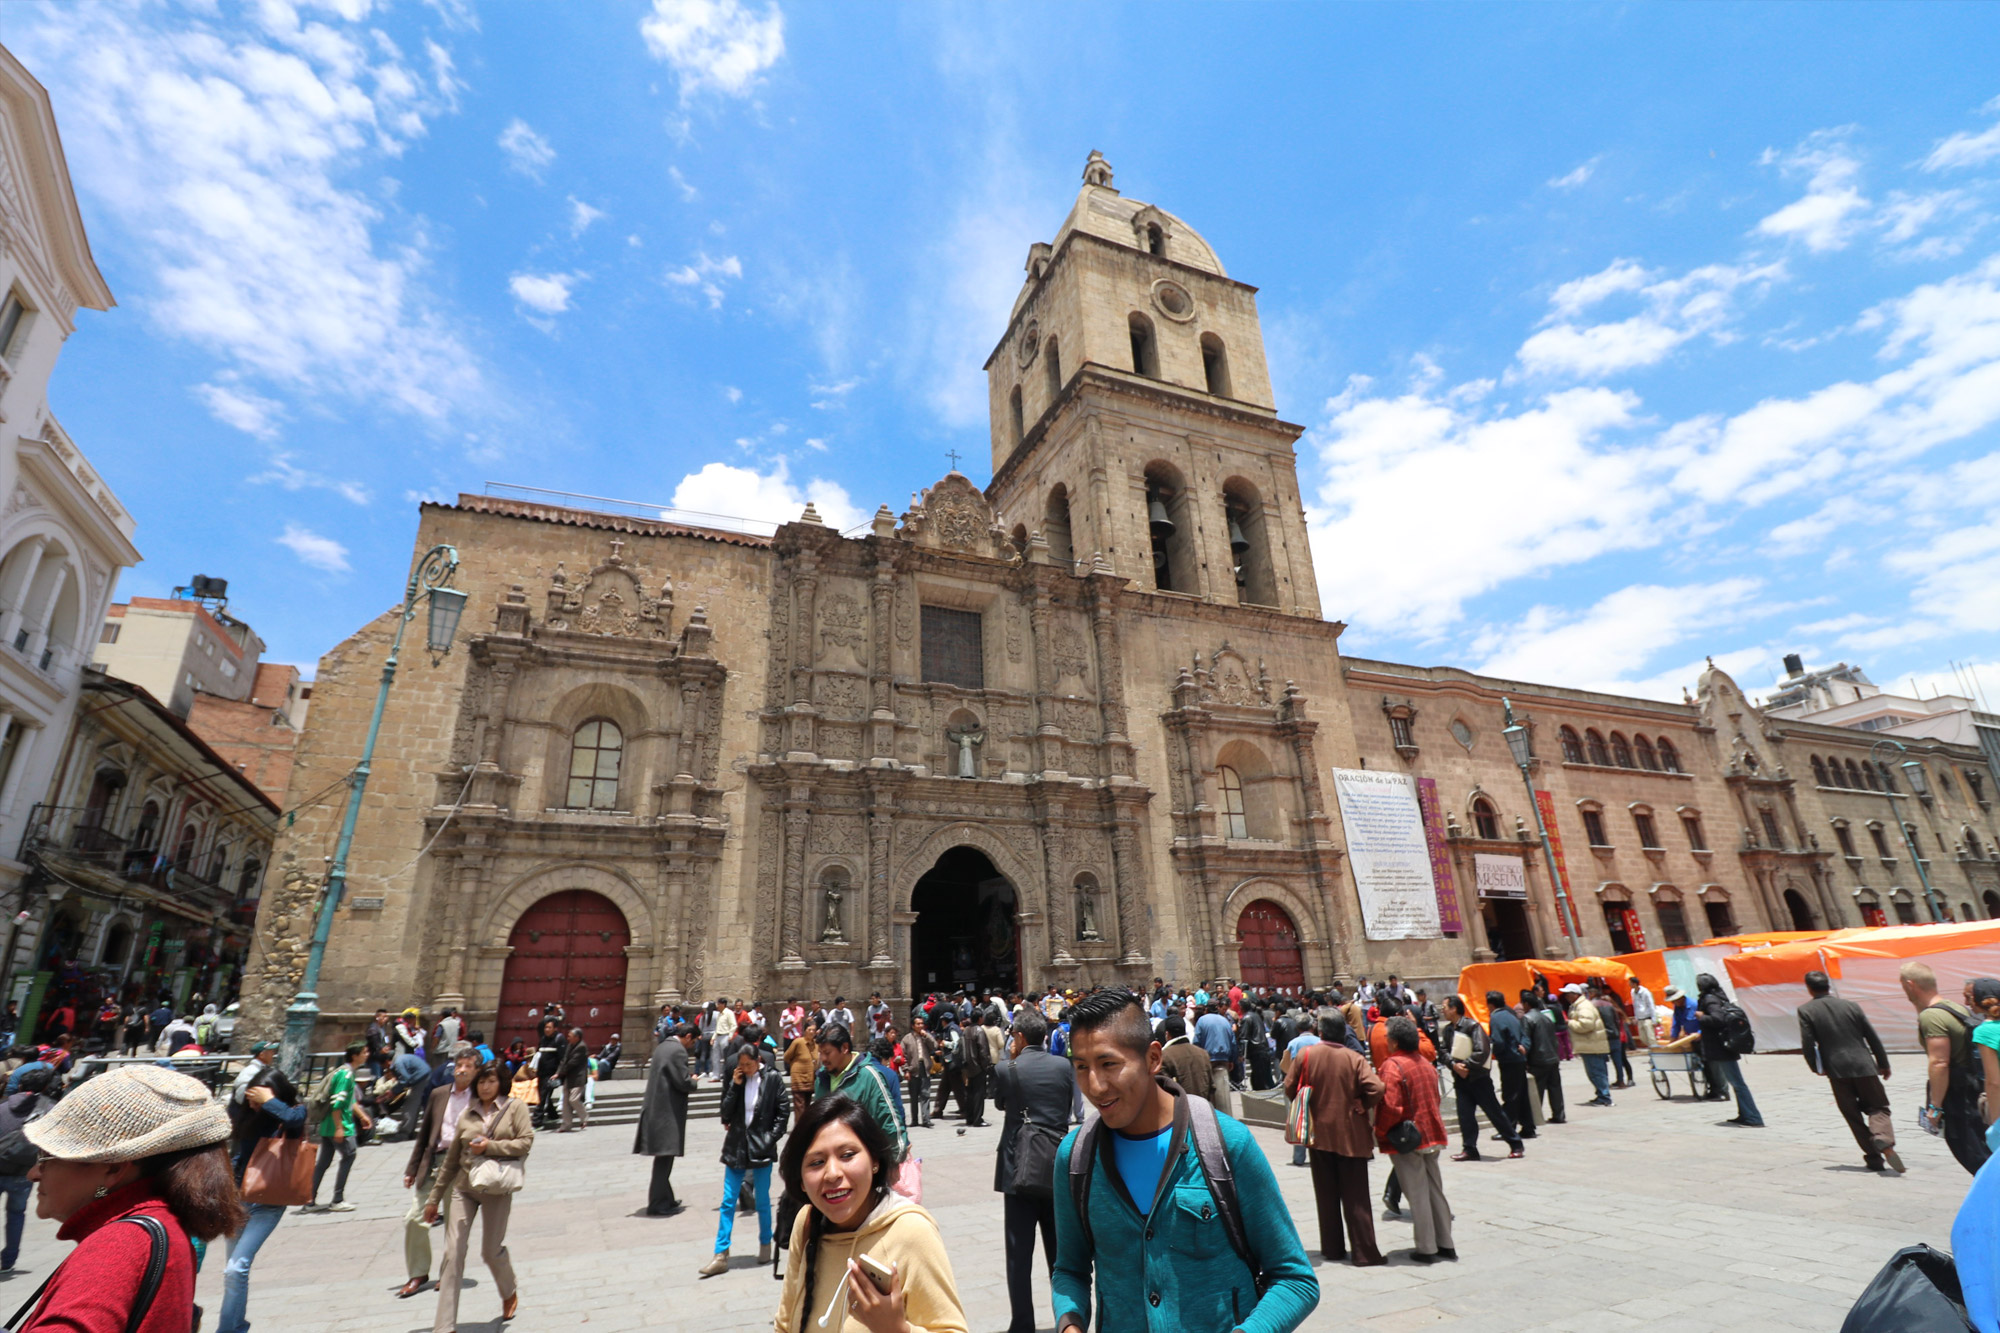 Reisverslaag Bolivia: We survived the Death Road - De Catedral de San Francisco